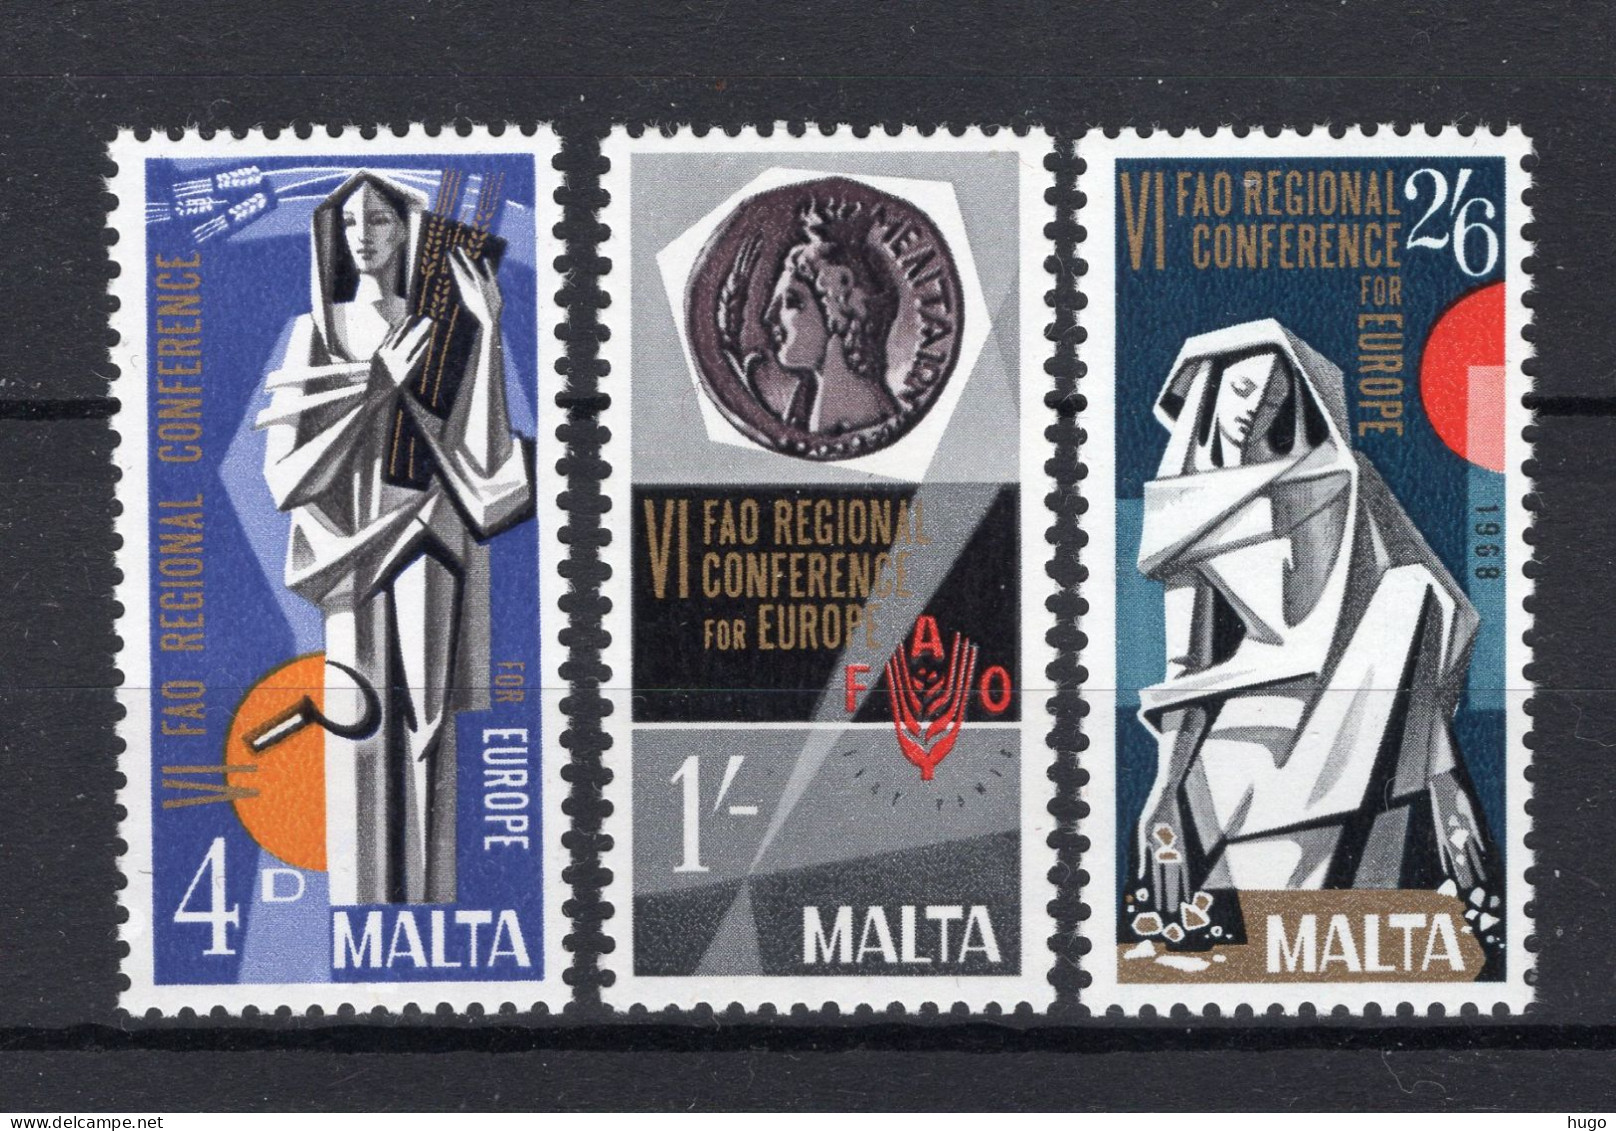 MALTA Yt. 385/387 MNH 1968 - Malte